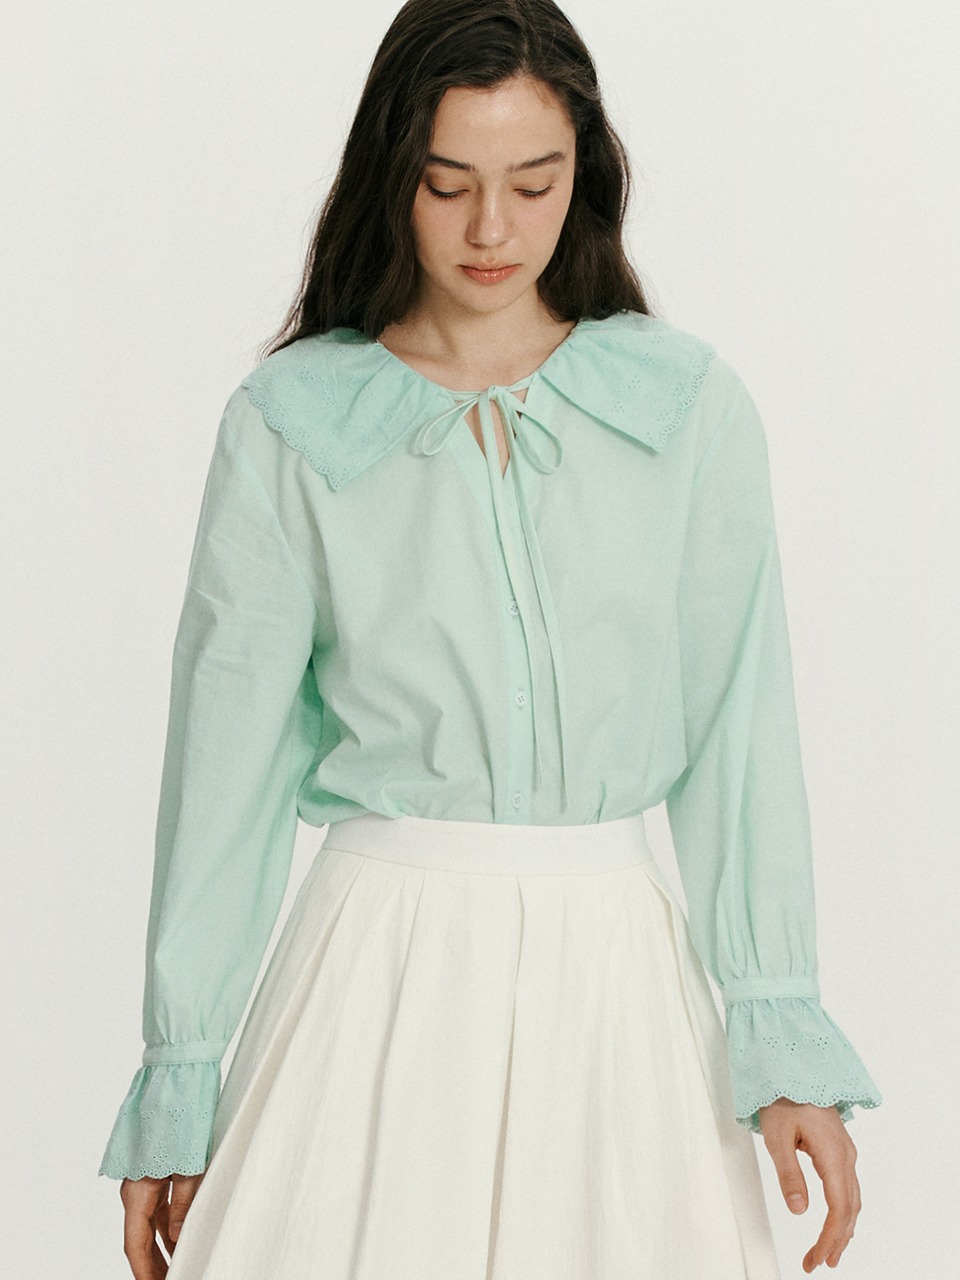 Lace ruffled neck blouse - Mint